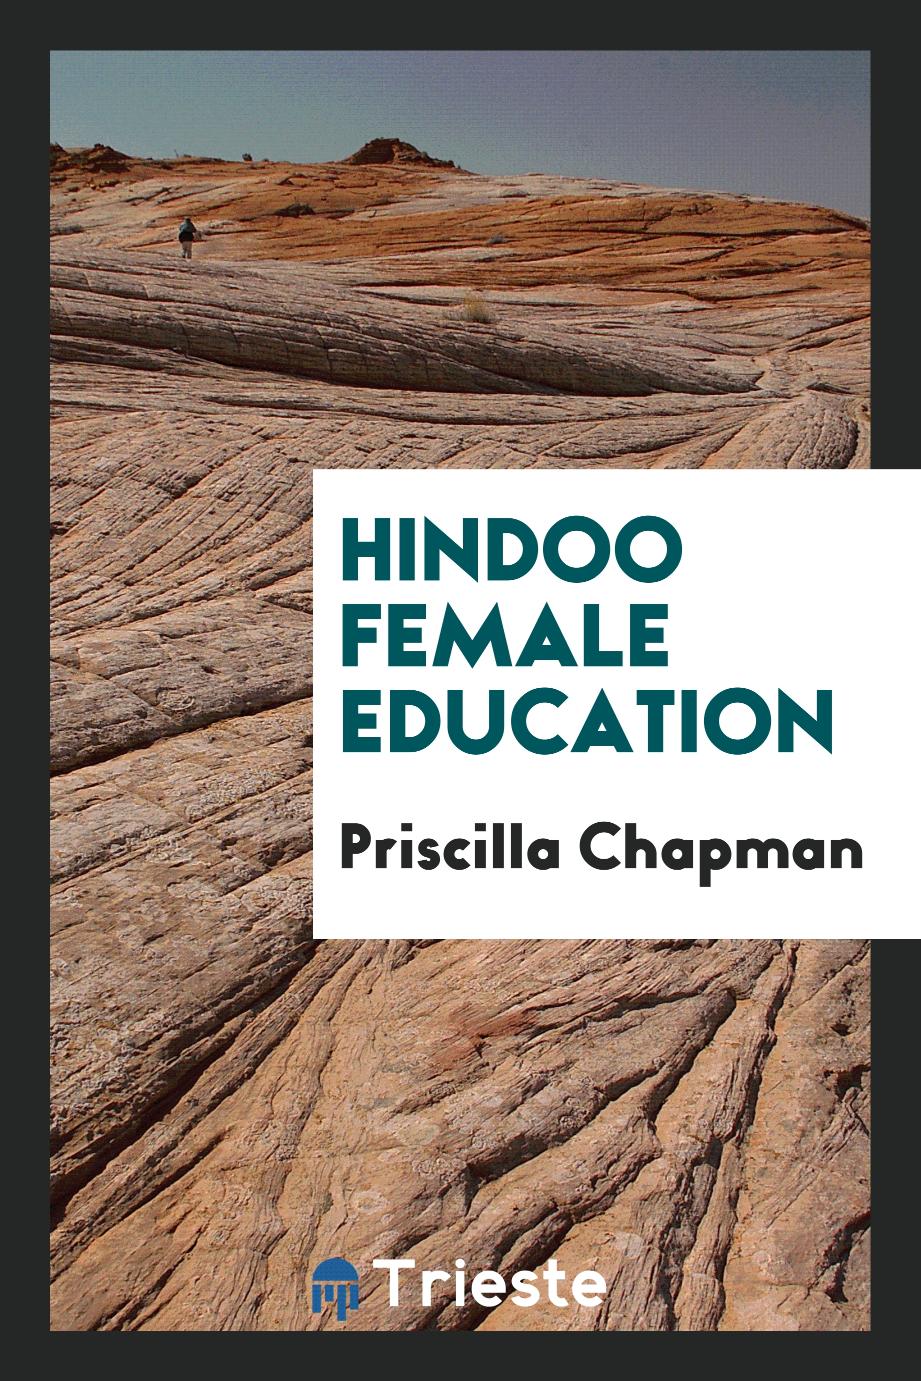 Hindoo female education